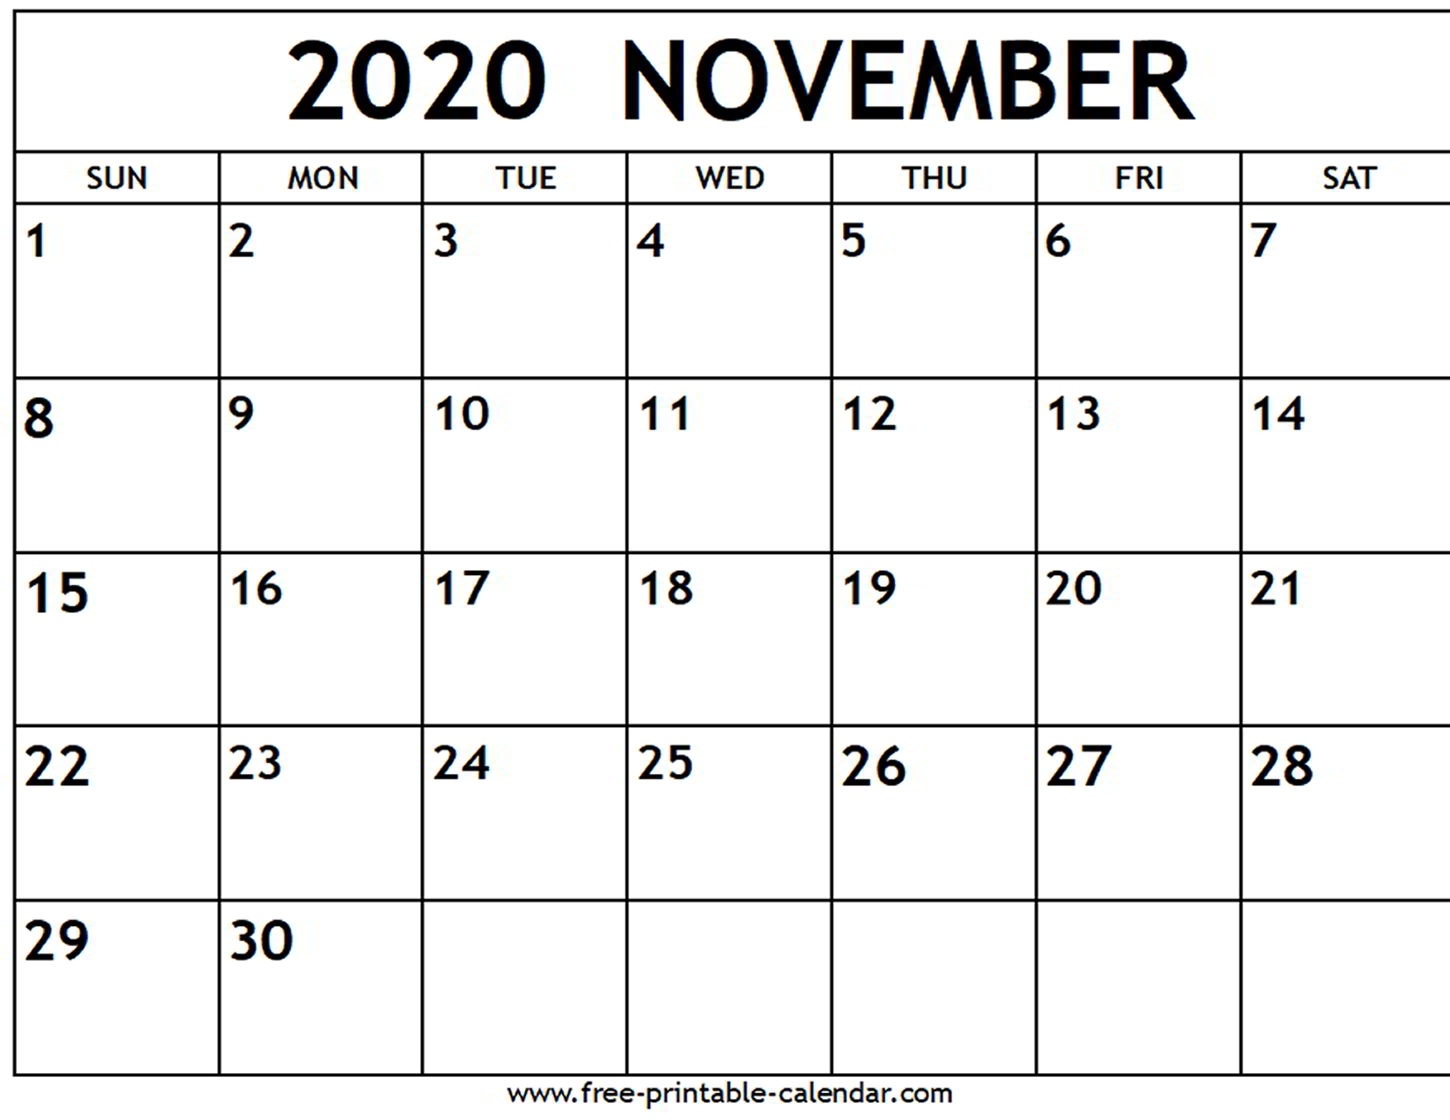 November 2020 Calendar - Free-Printable-Calendar Exceptional 2020 Calendar For November